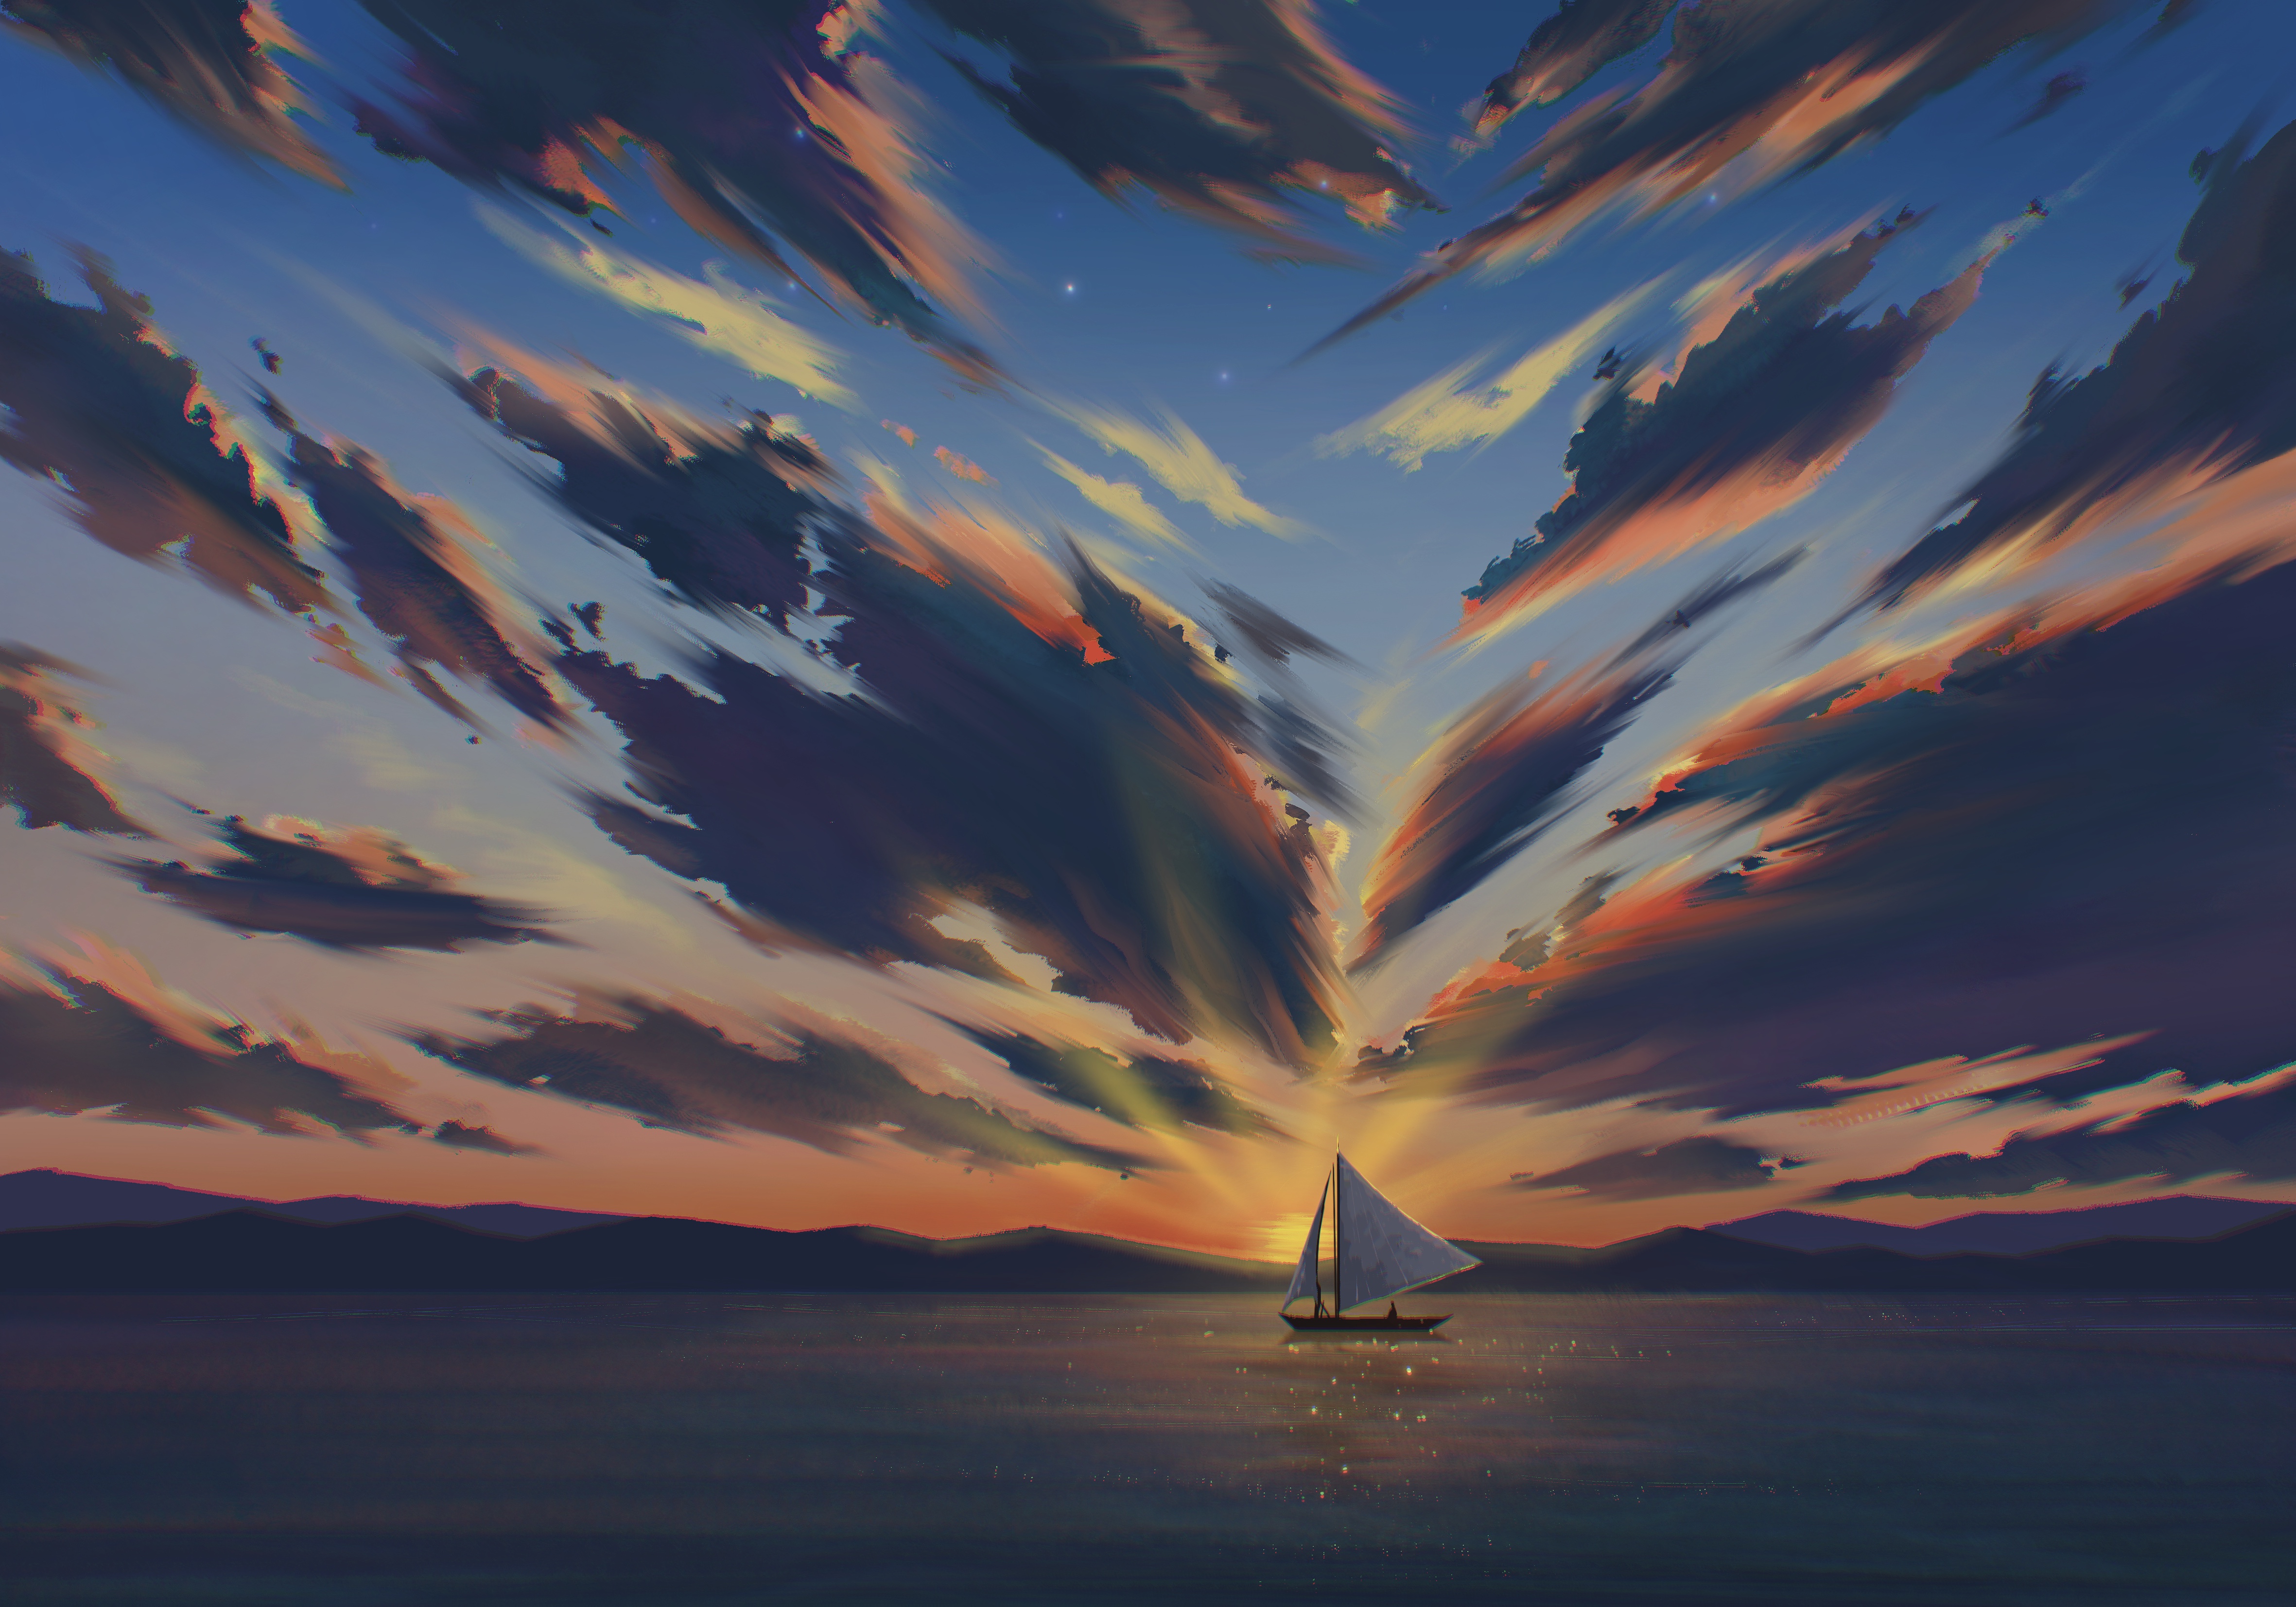 Digital Art Artwork Illustration Painting Landscape Clouds Sea Water Boat Sailing Ship Sunset Sky 4724x3307